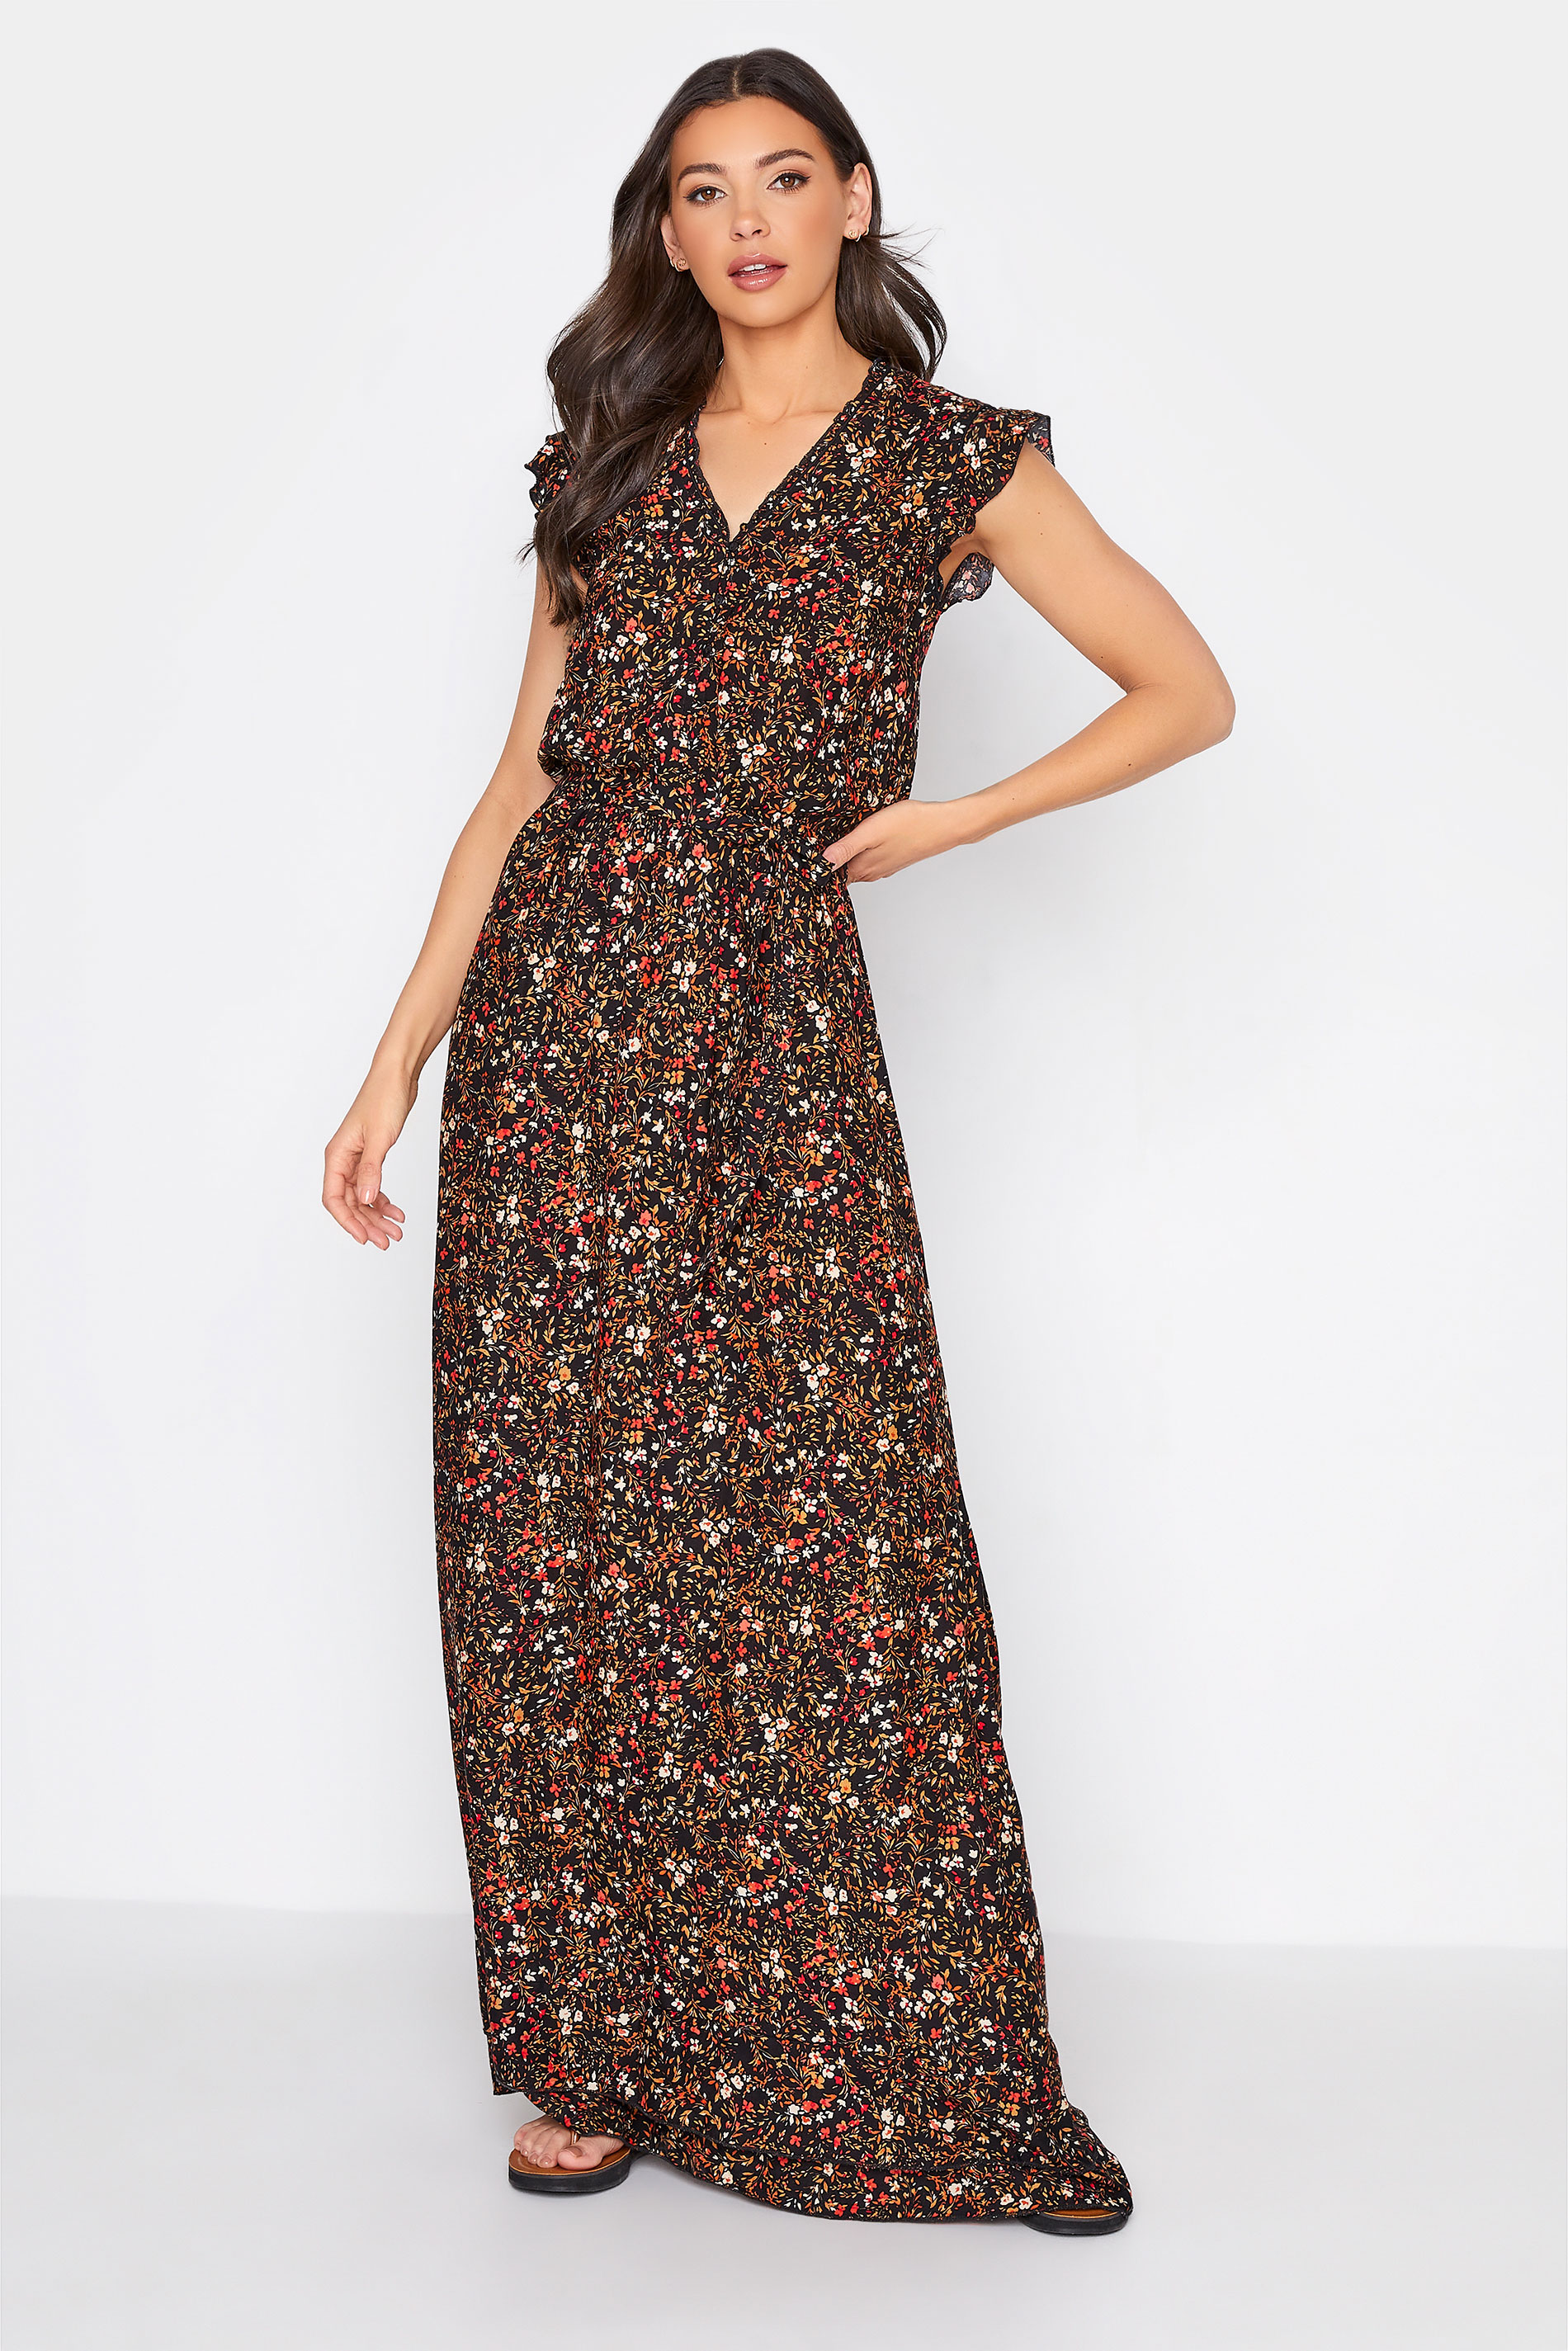 Tall Women's LTS Black Ditsy Floral Maxi Dress | Long Tall Sally 1